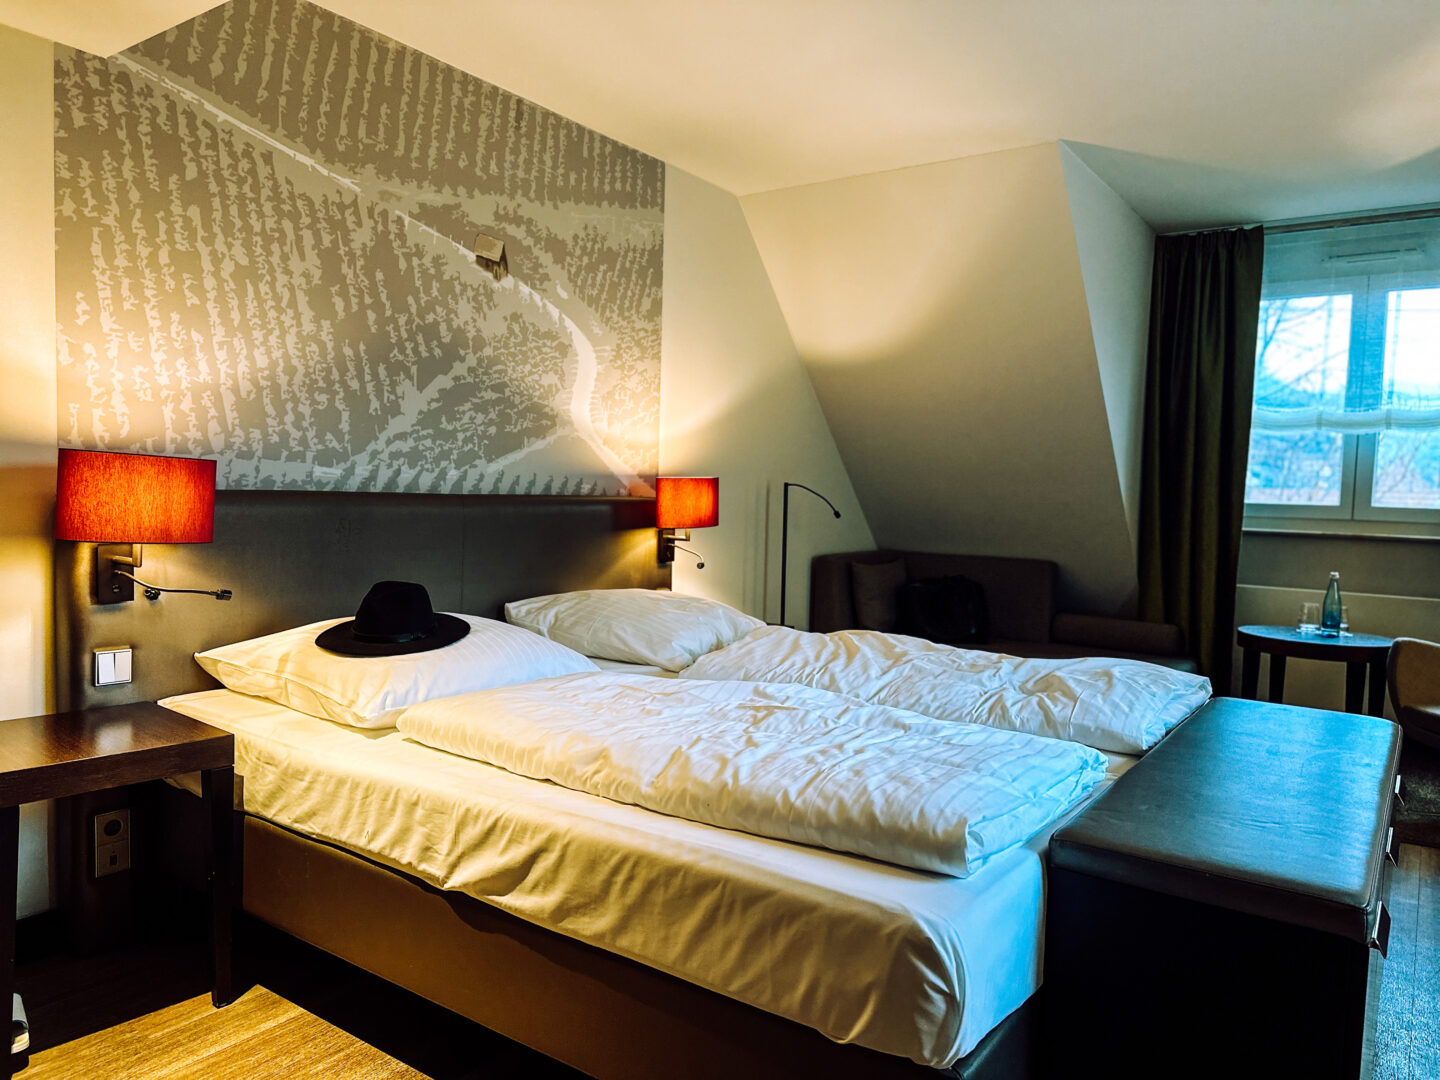 Hotel Ritter Durbach, Gentlemens Journey, Komfortzimmer deluxe, Doppelzimmer